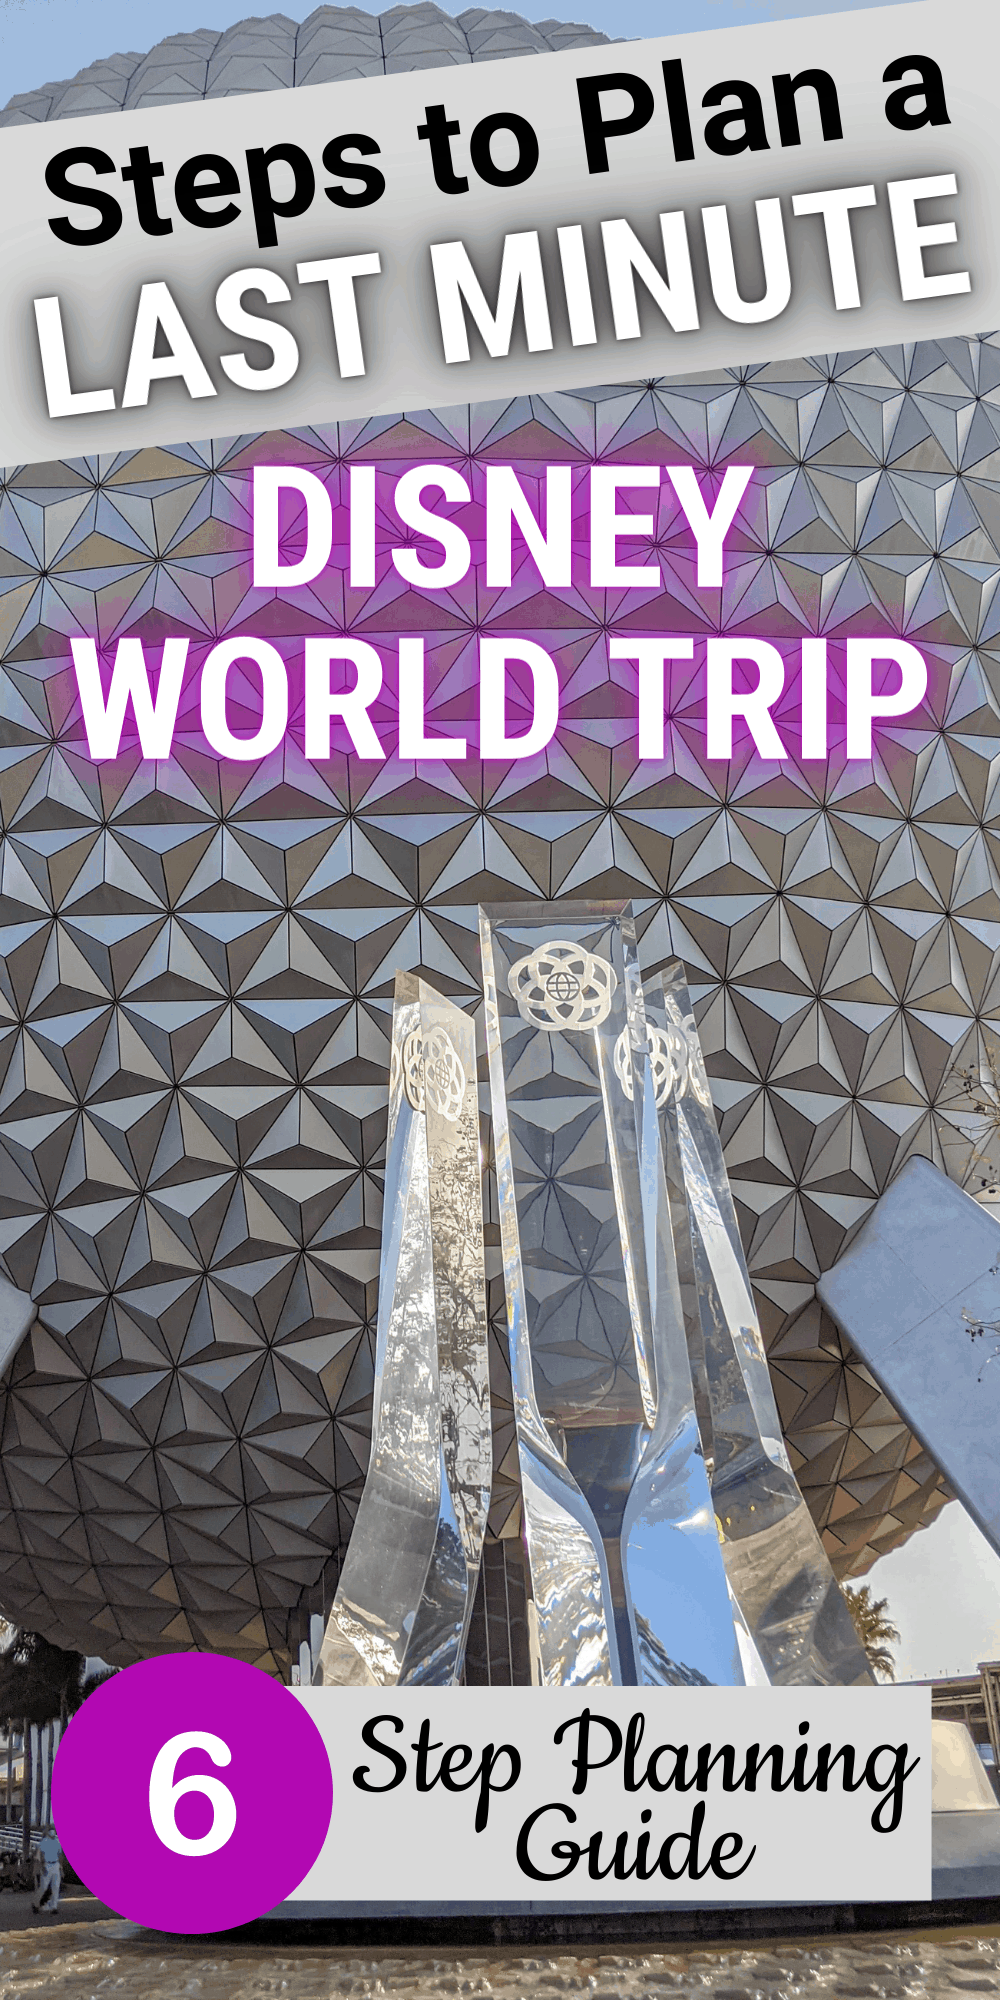 Last Minute Disney Trip Planning Guide The Disney Journey